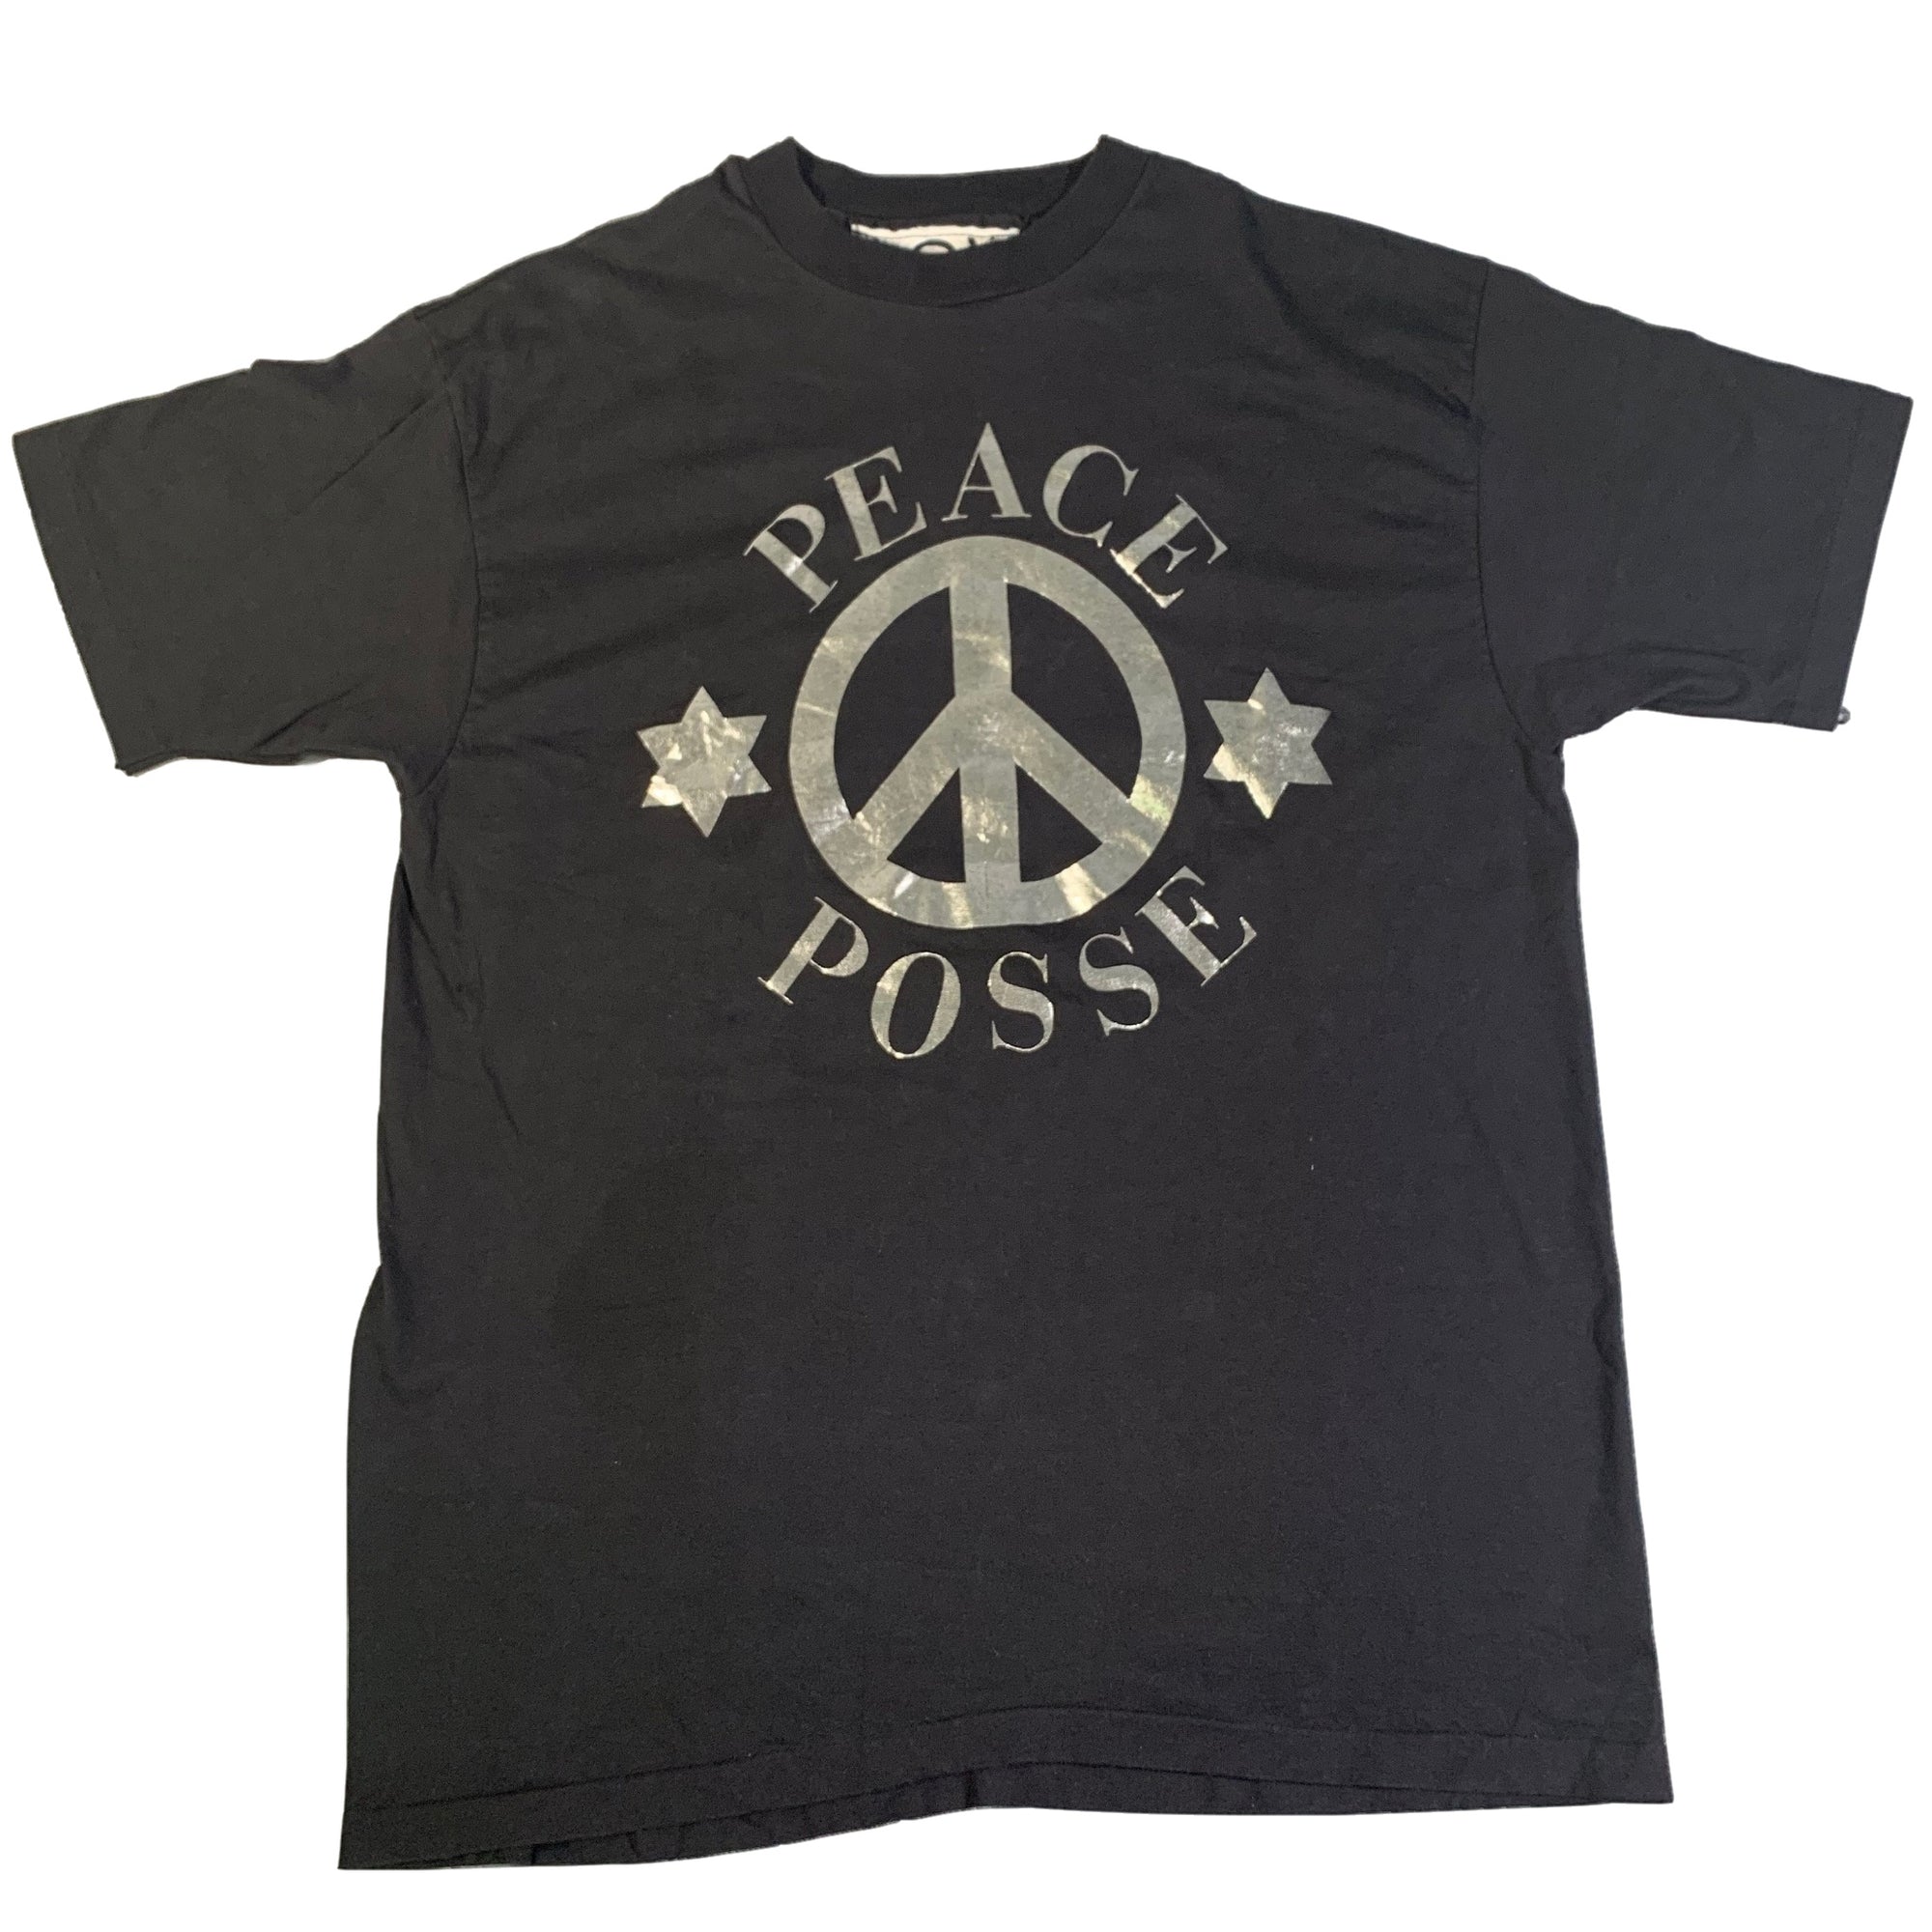 Vintage Boy London "Peace Posse" T-Shirt - jointcustodydc